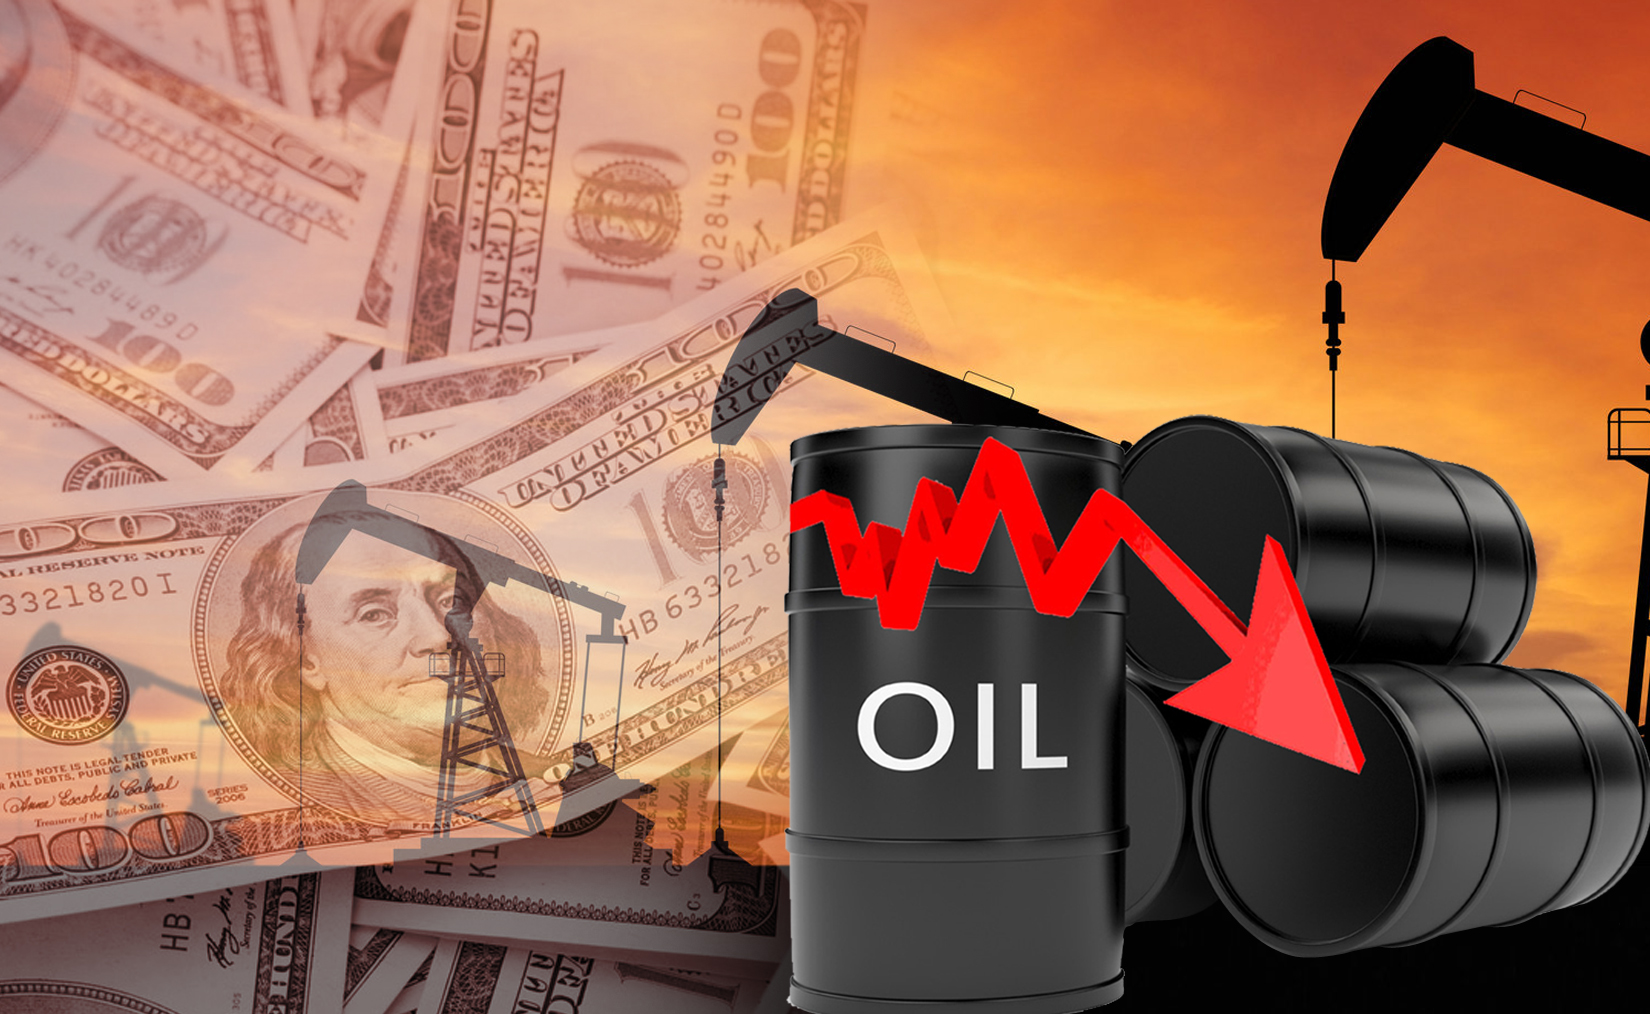 Kuwait oil price down 94 cents to USD 40.97 pb                                                                                                                                                                                                            